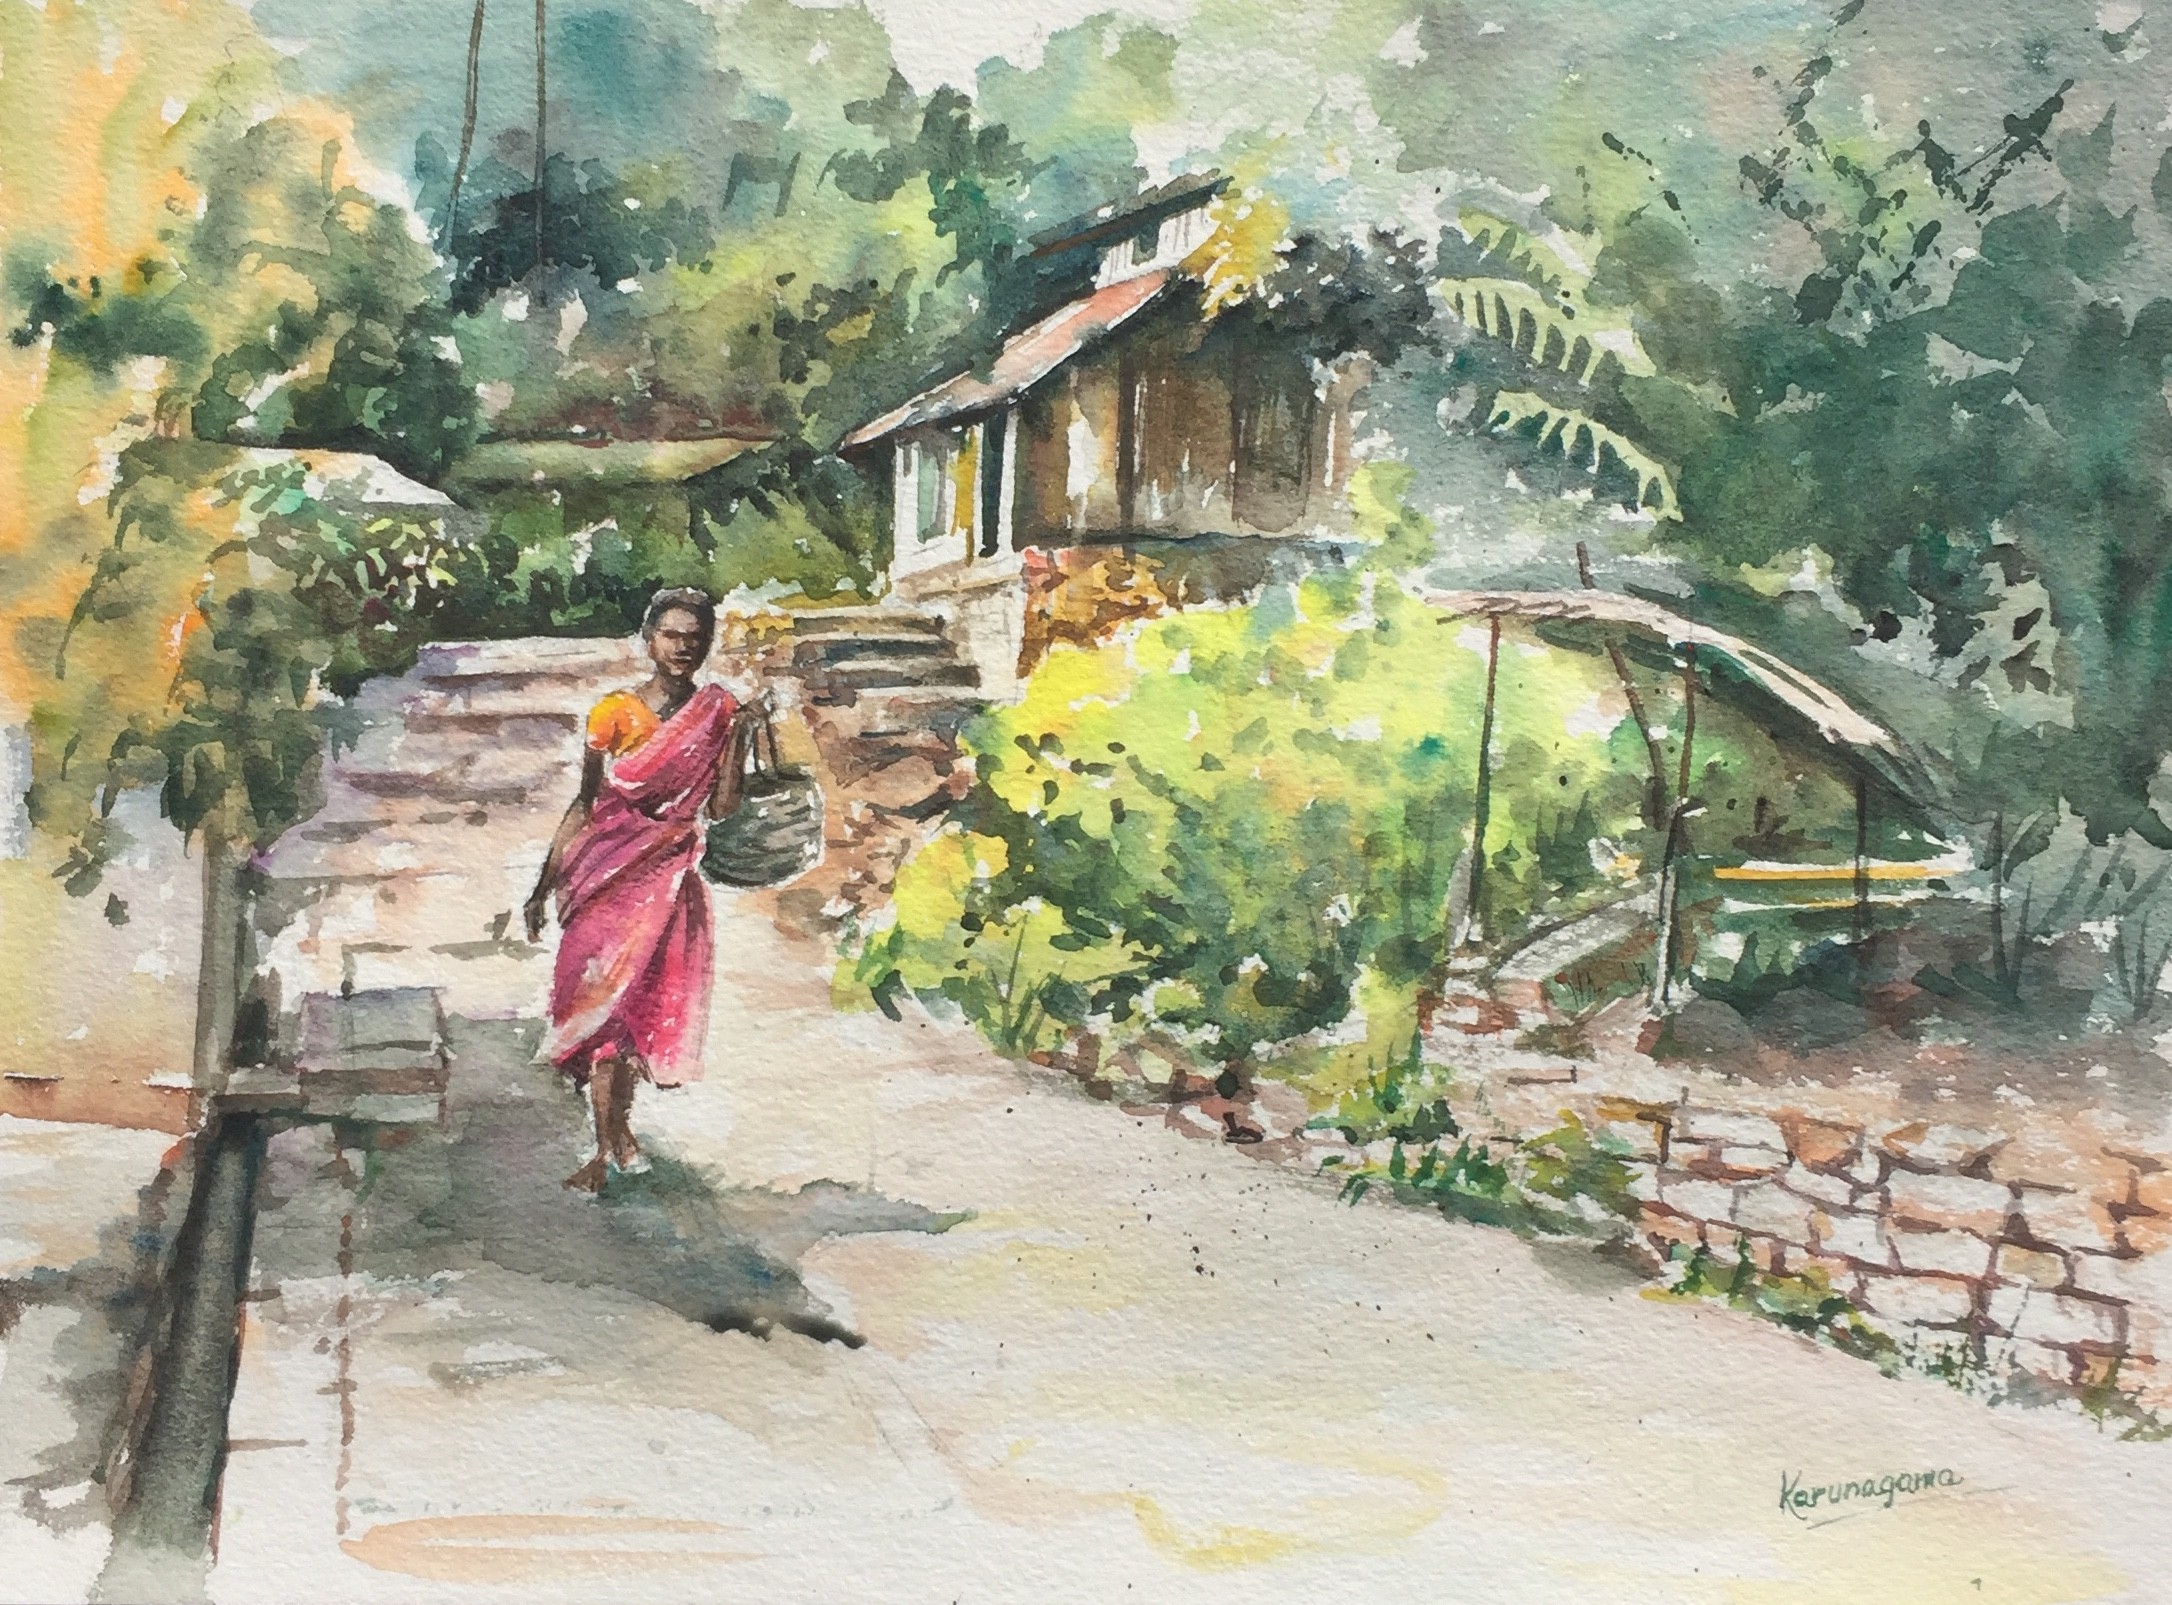 Landscape by Sarath Karunagama